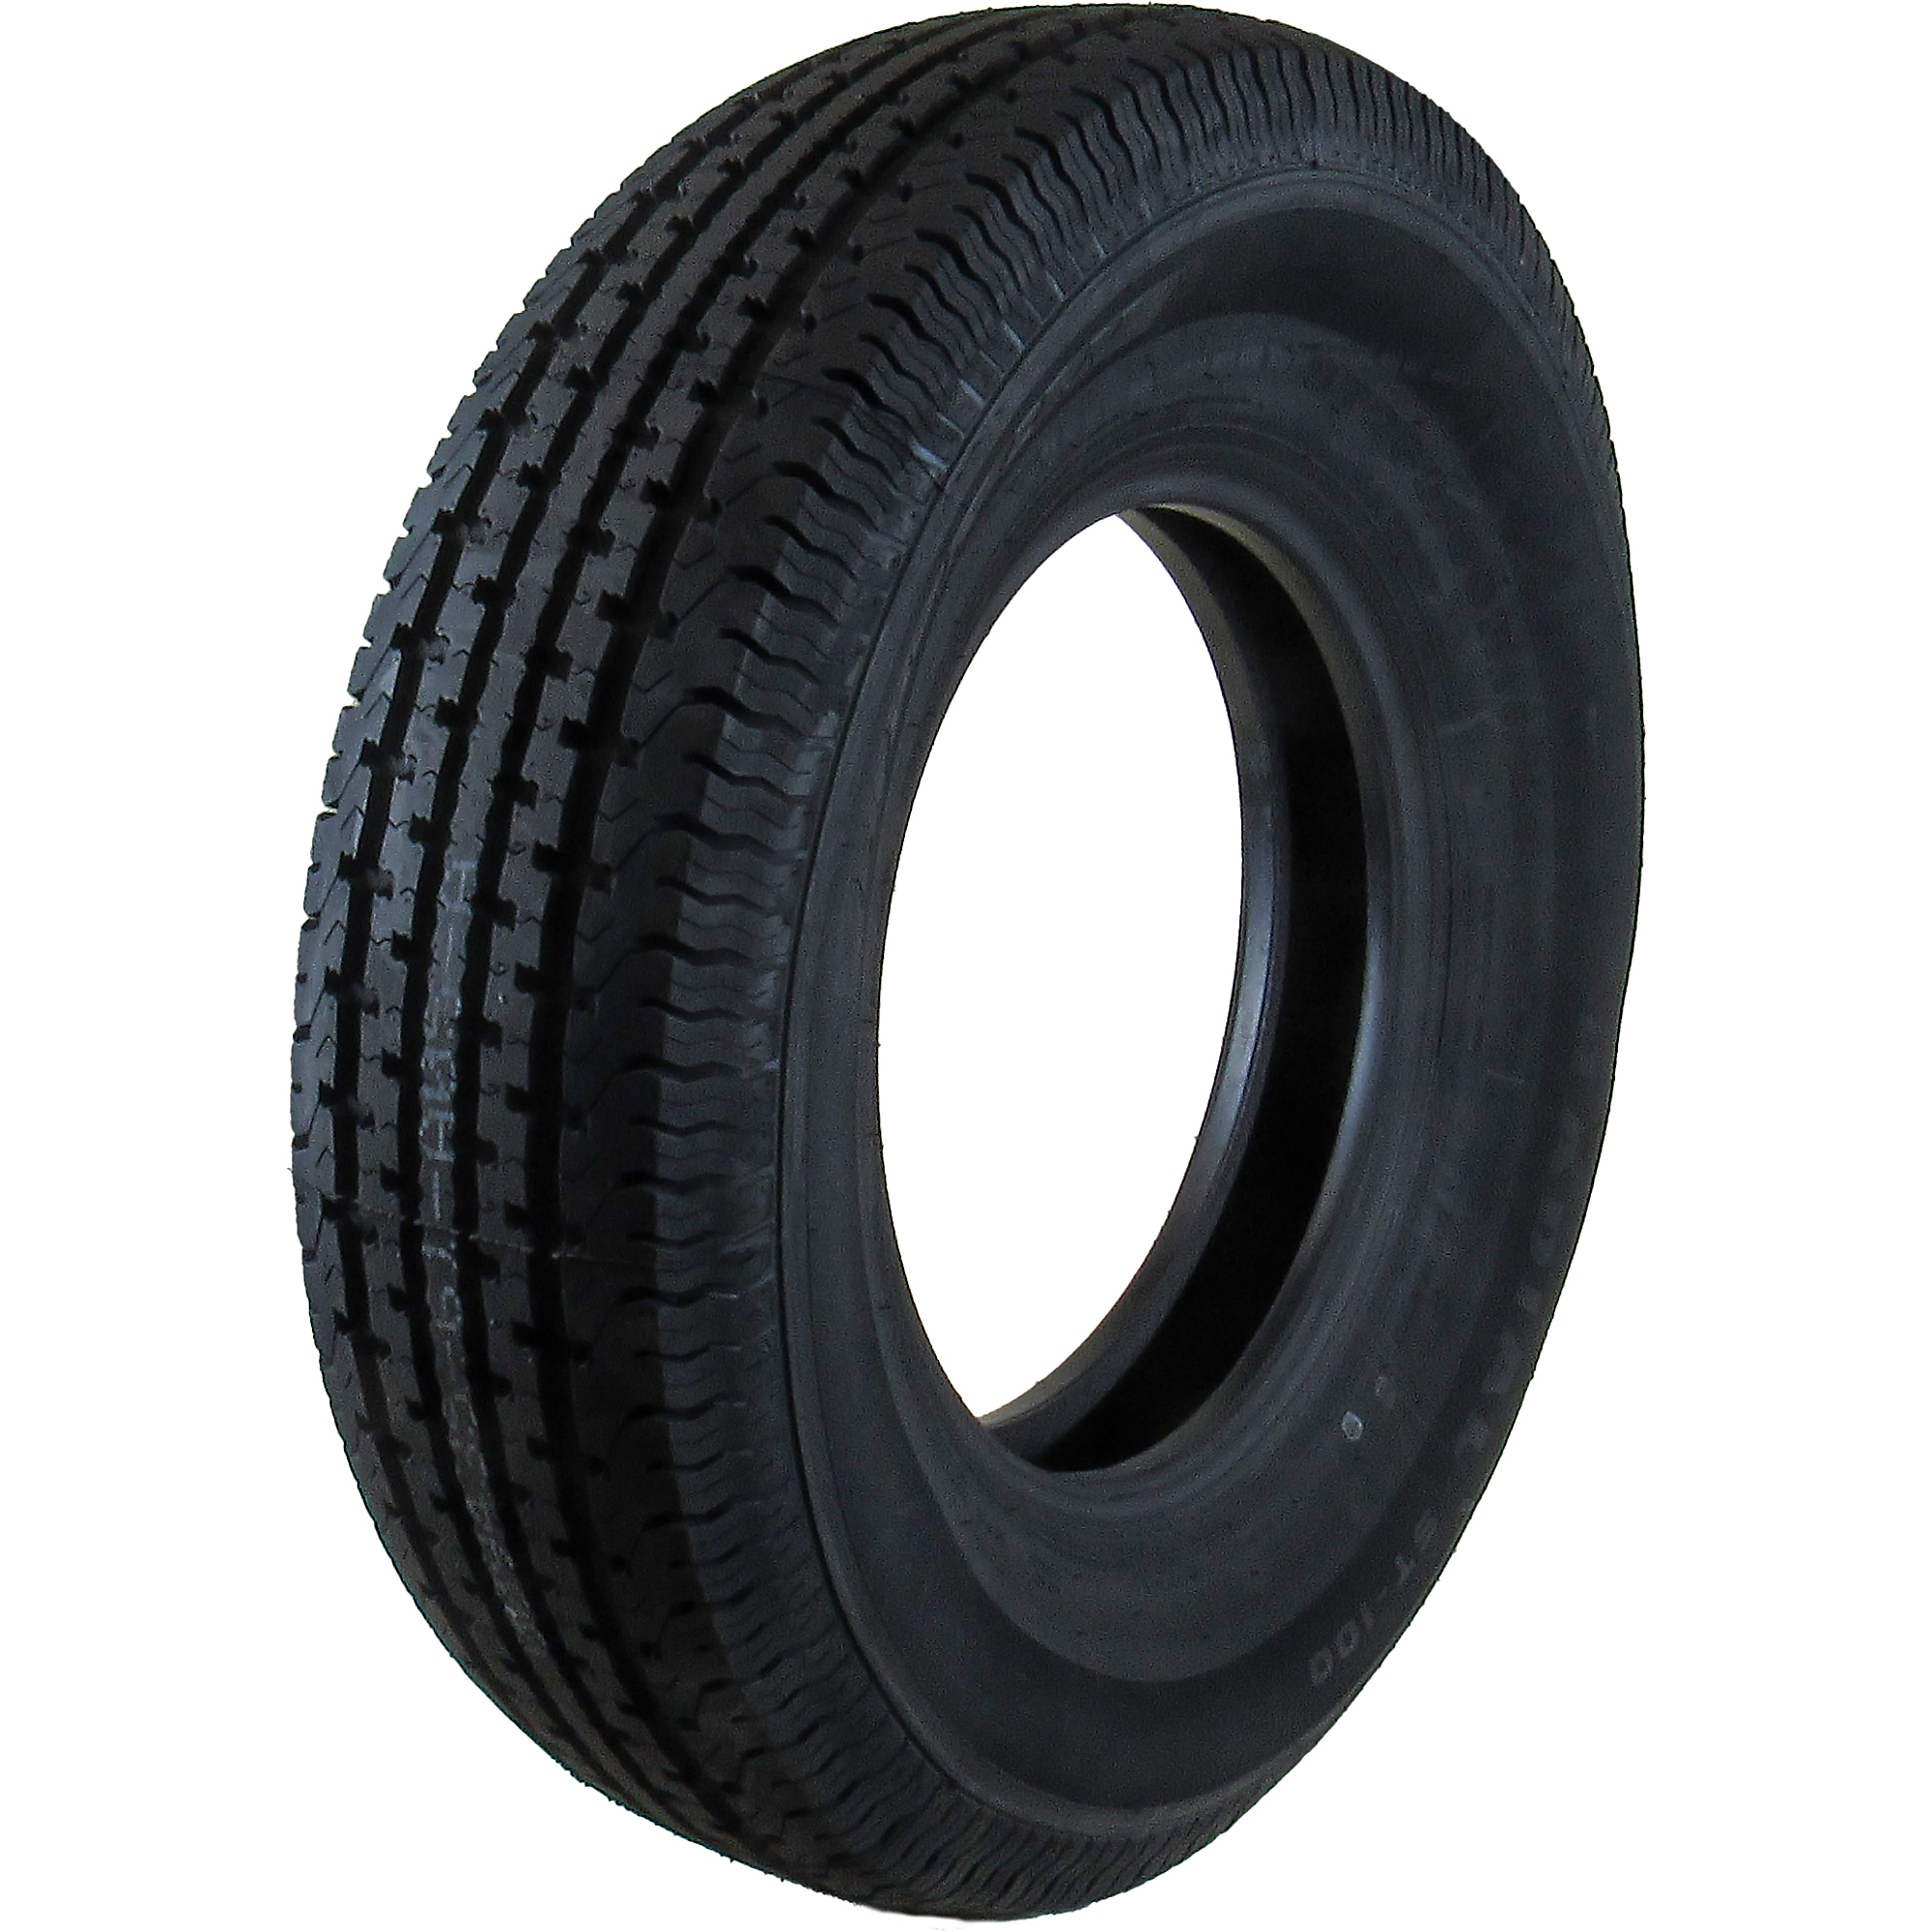 HI-RUN, Highway Trailer Tire, Radial-ply, Tire Size ST235/80R16 Load Range Rating E, Model HZT1007